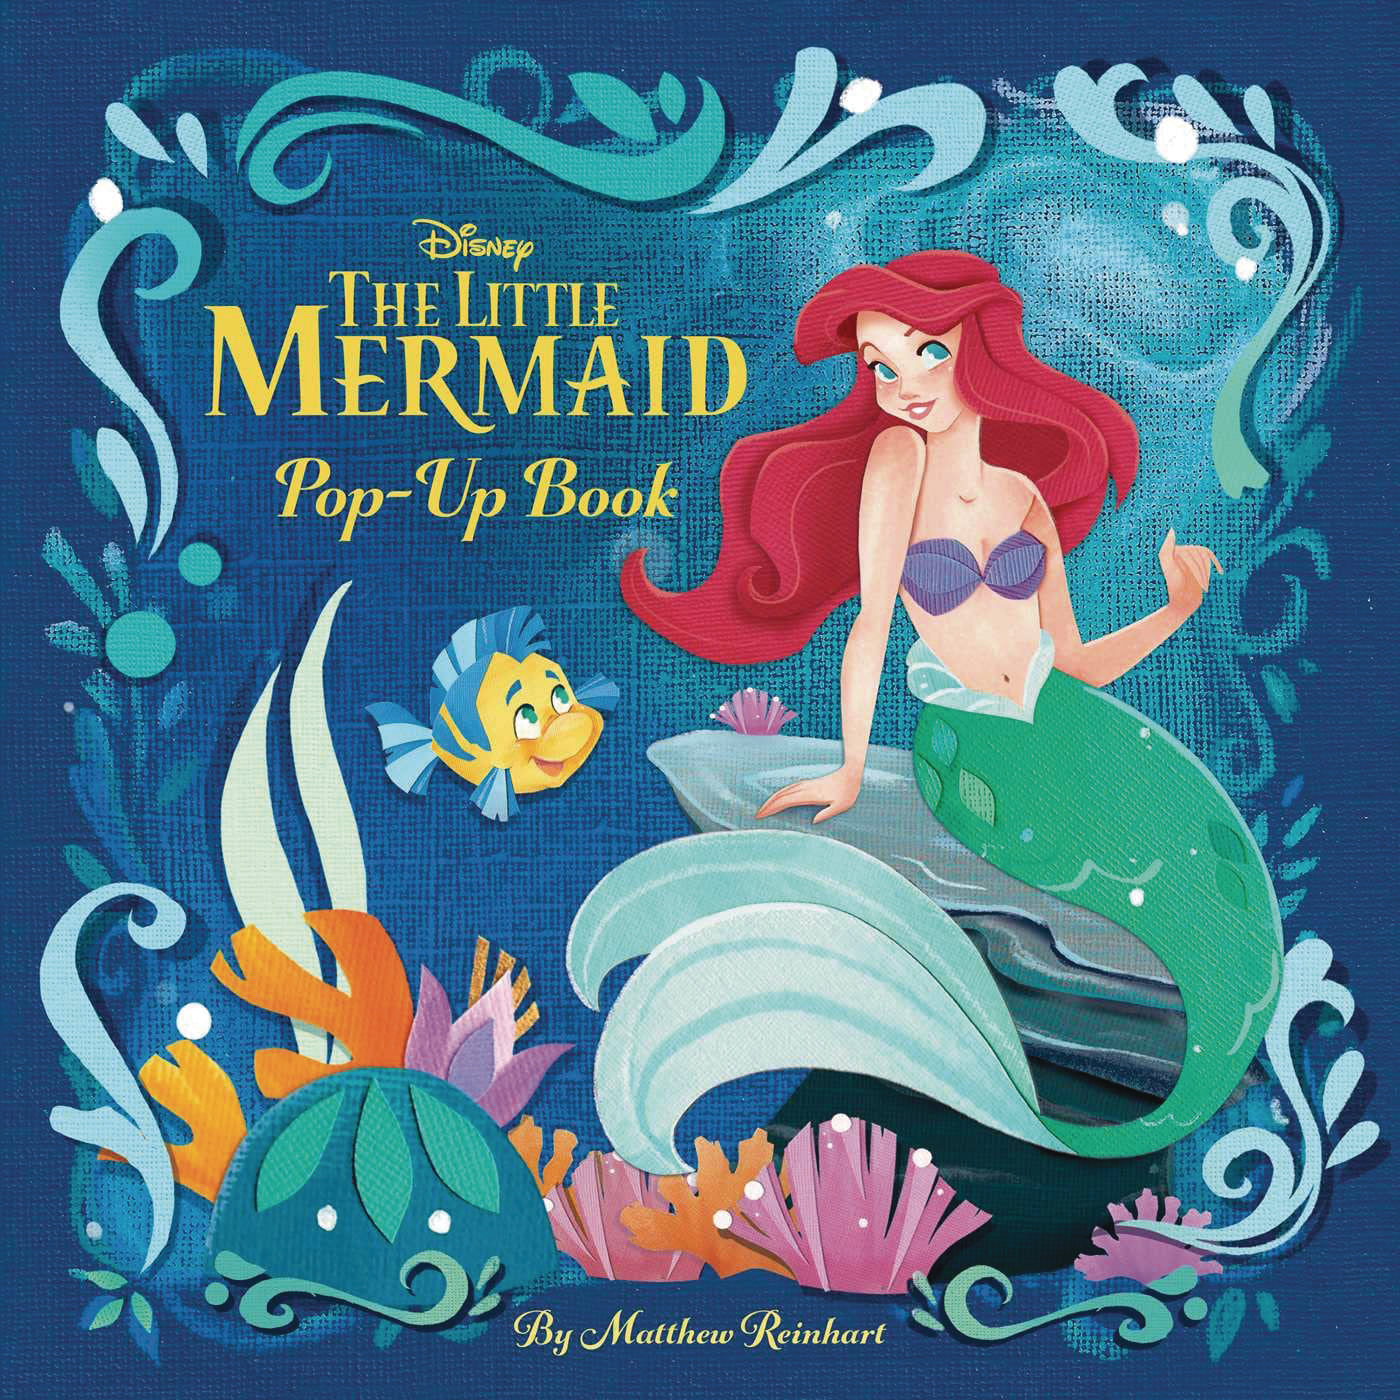 The Little Mermaid Live Action Novelization by Faith Noelle